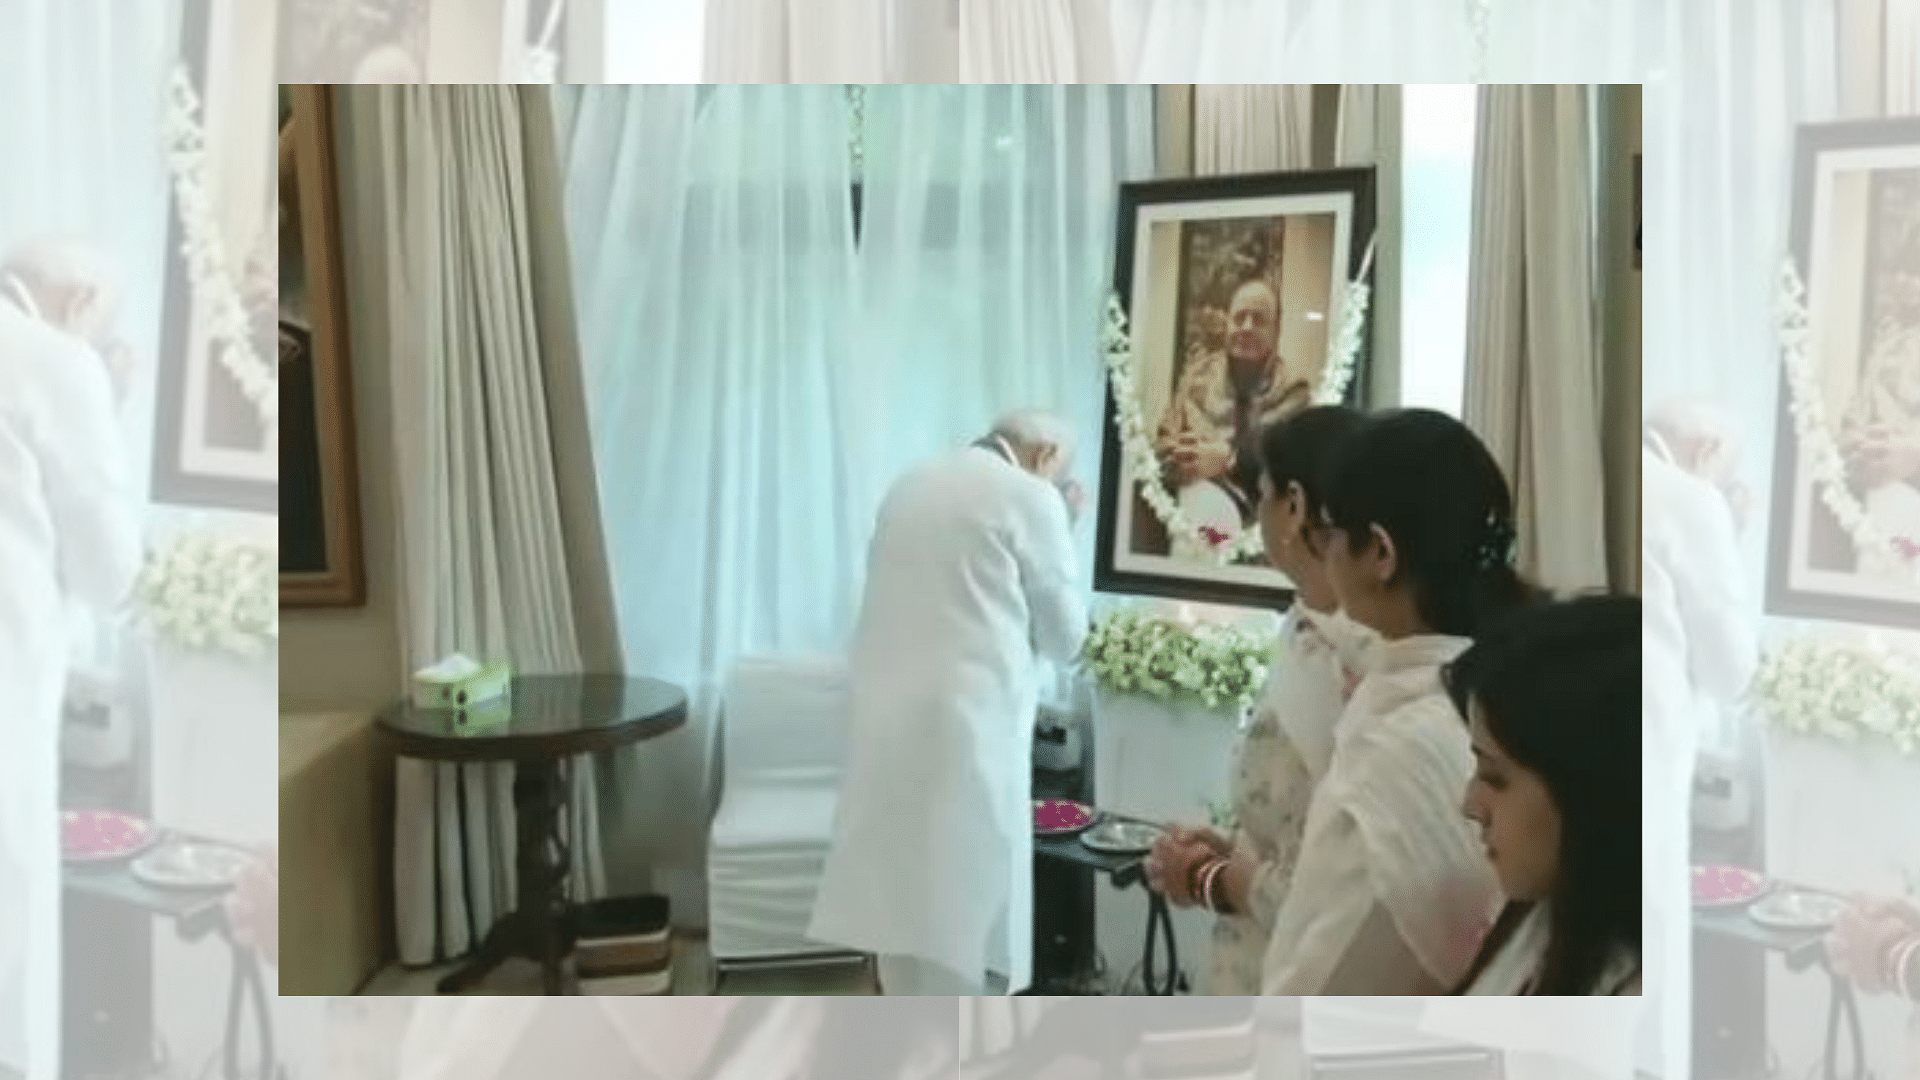 PM Modi met Jaitley’s family to offer his condolences.